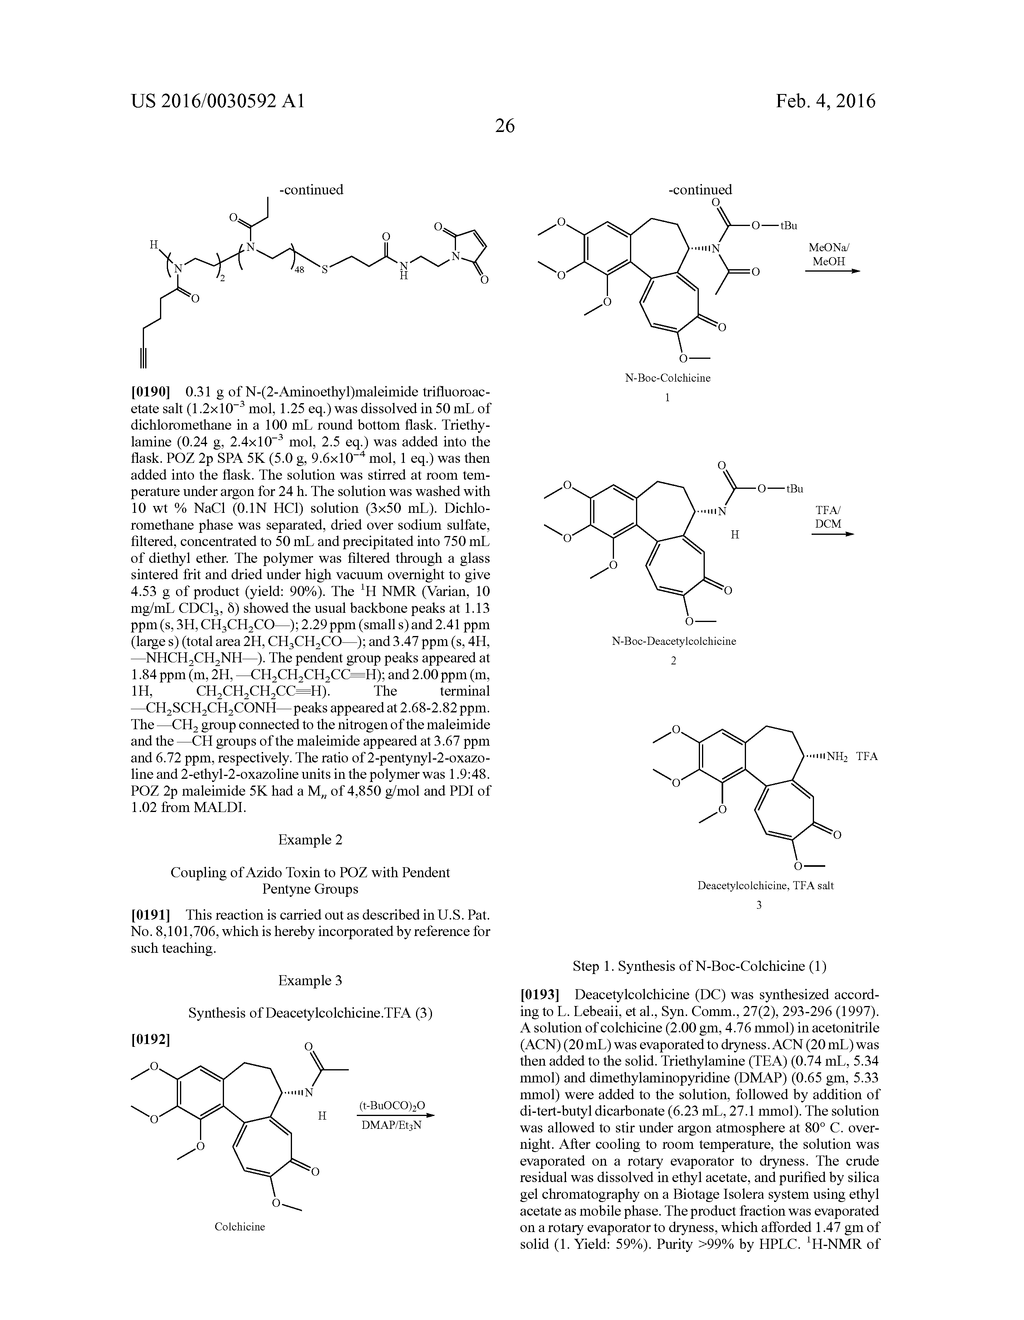 Polyoxazoline Antibody Drug Conjugates - diagram, schematic, and image 31